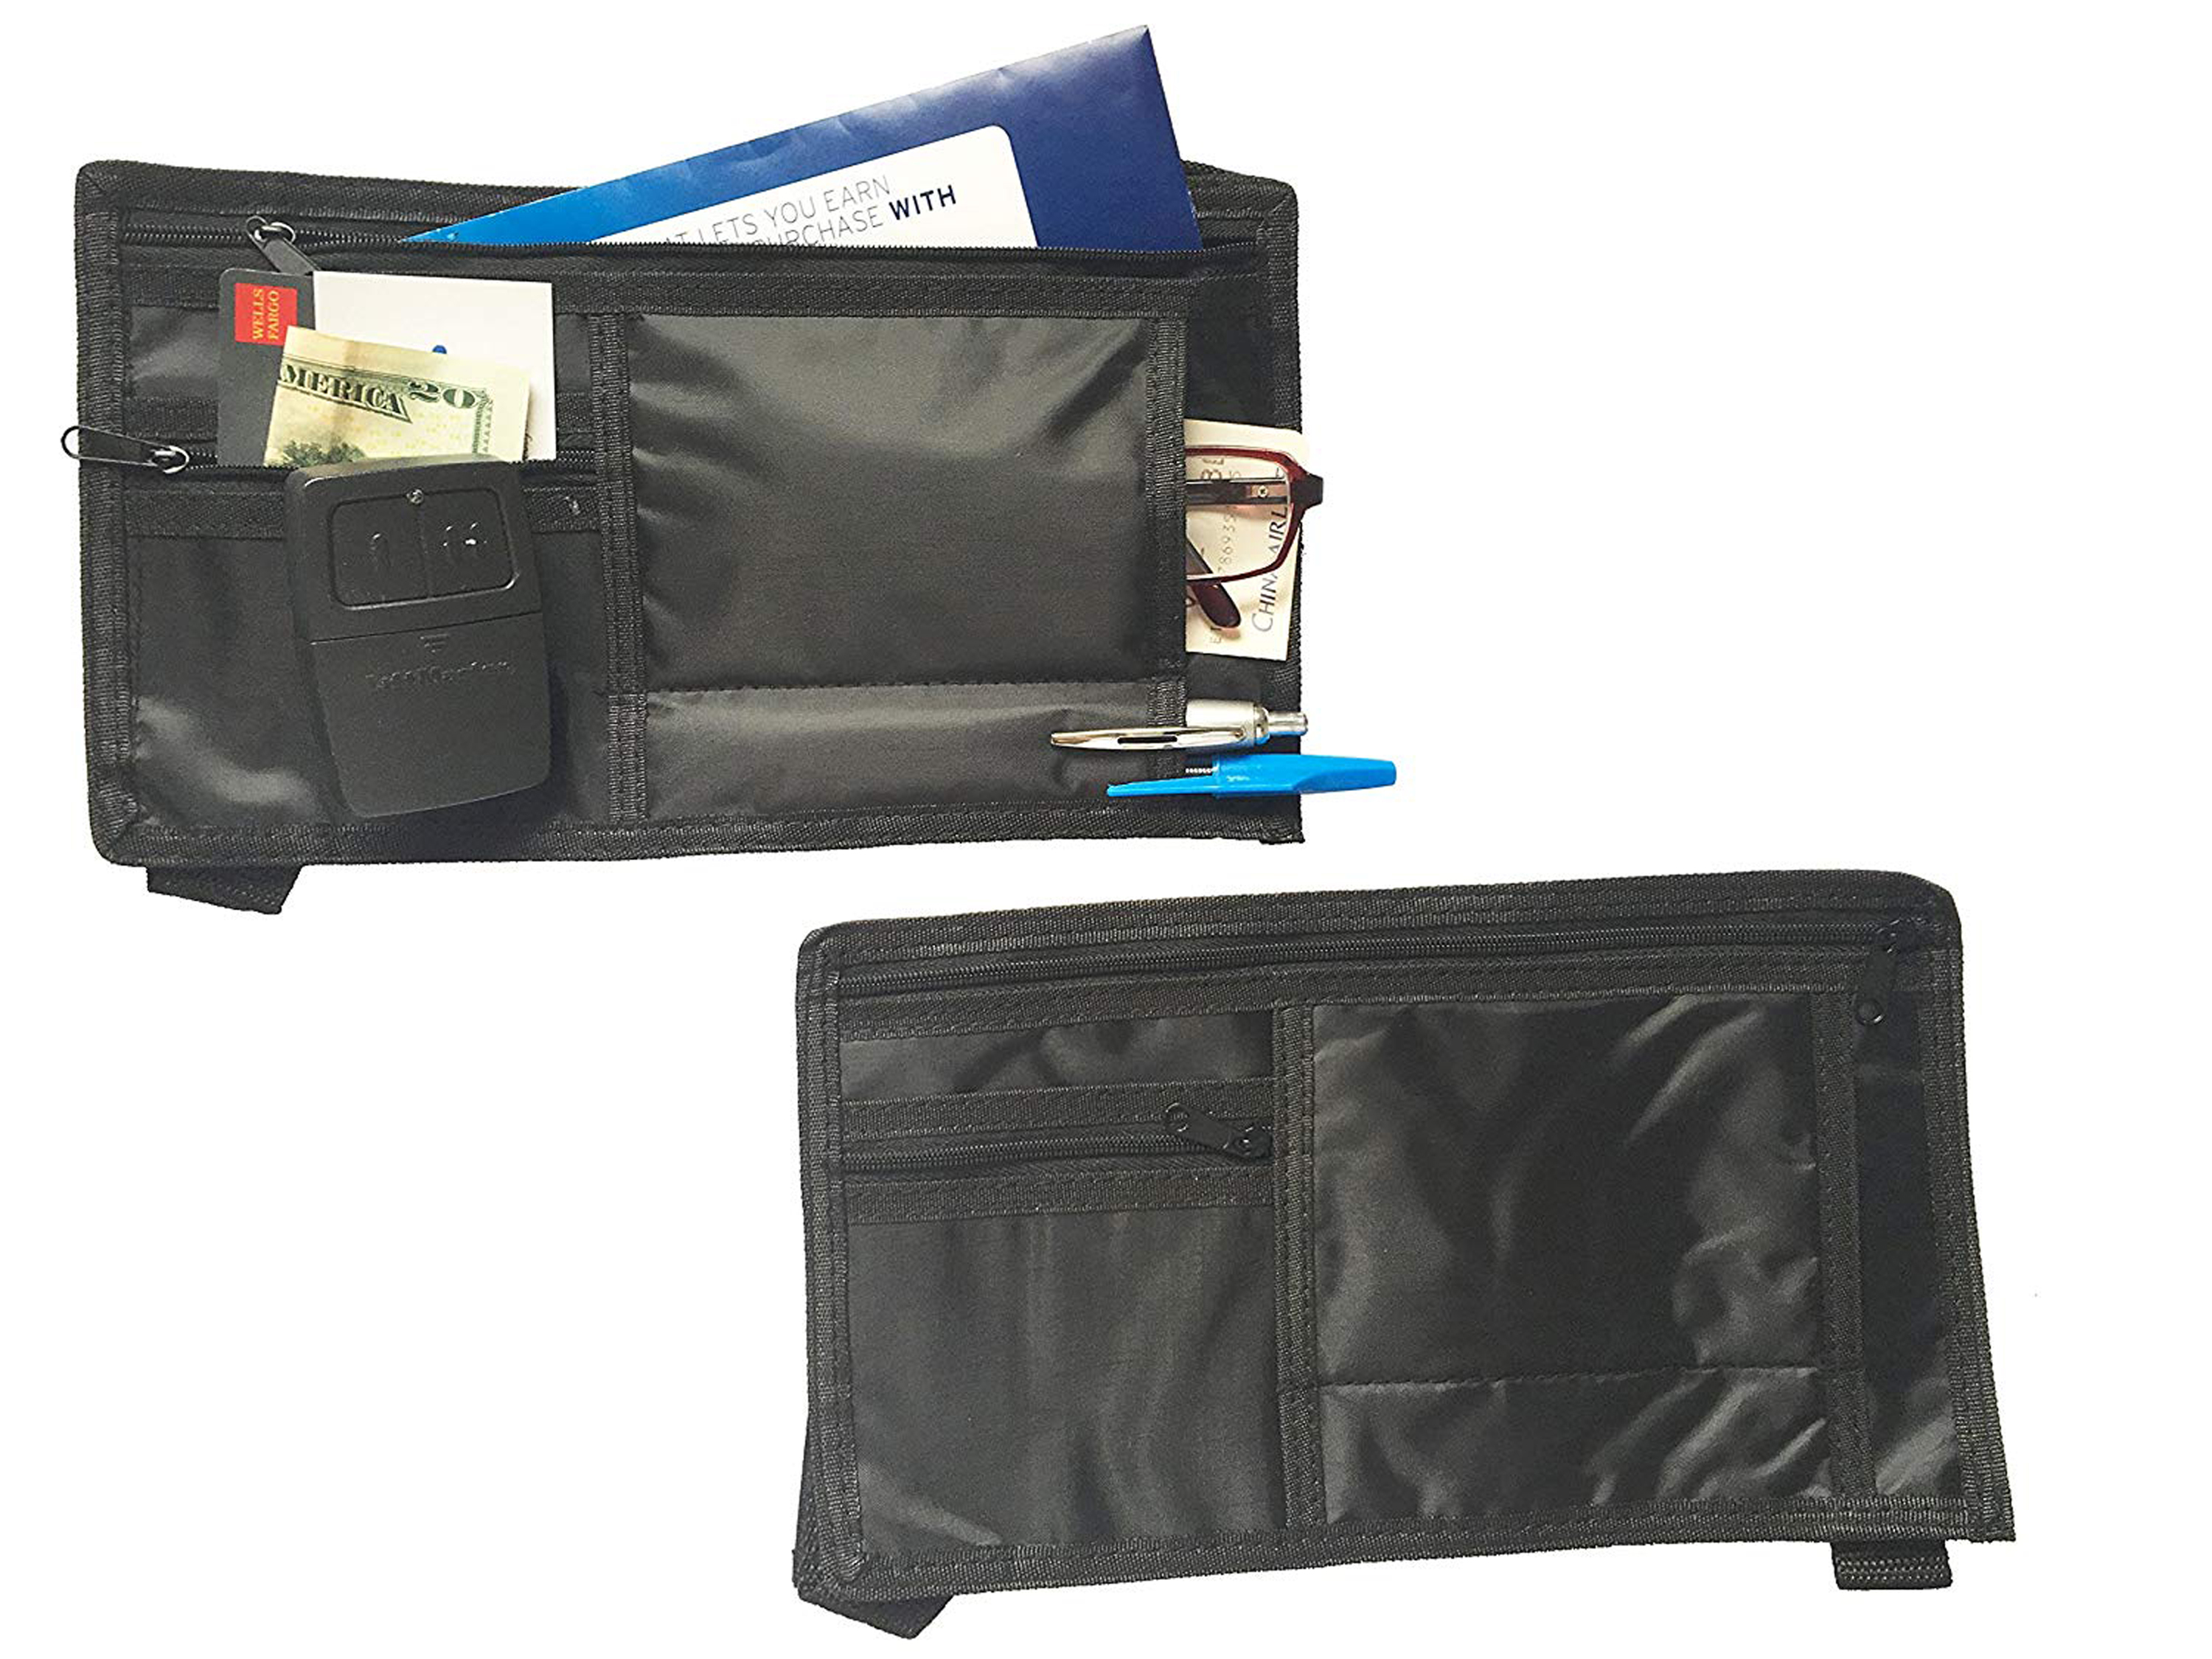 ENINFUT Car Sun Visor Organizer PU Leather Auto Interior Accessories Pocket Organizer with Multi-Pocket with Zipper Net Gray 